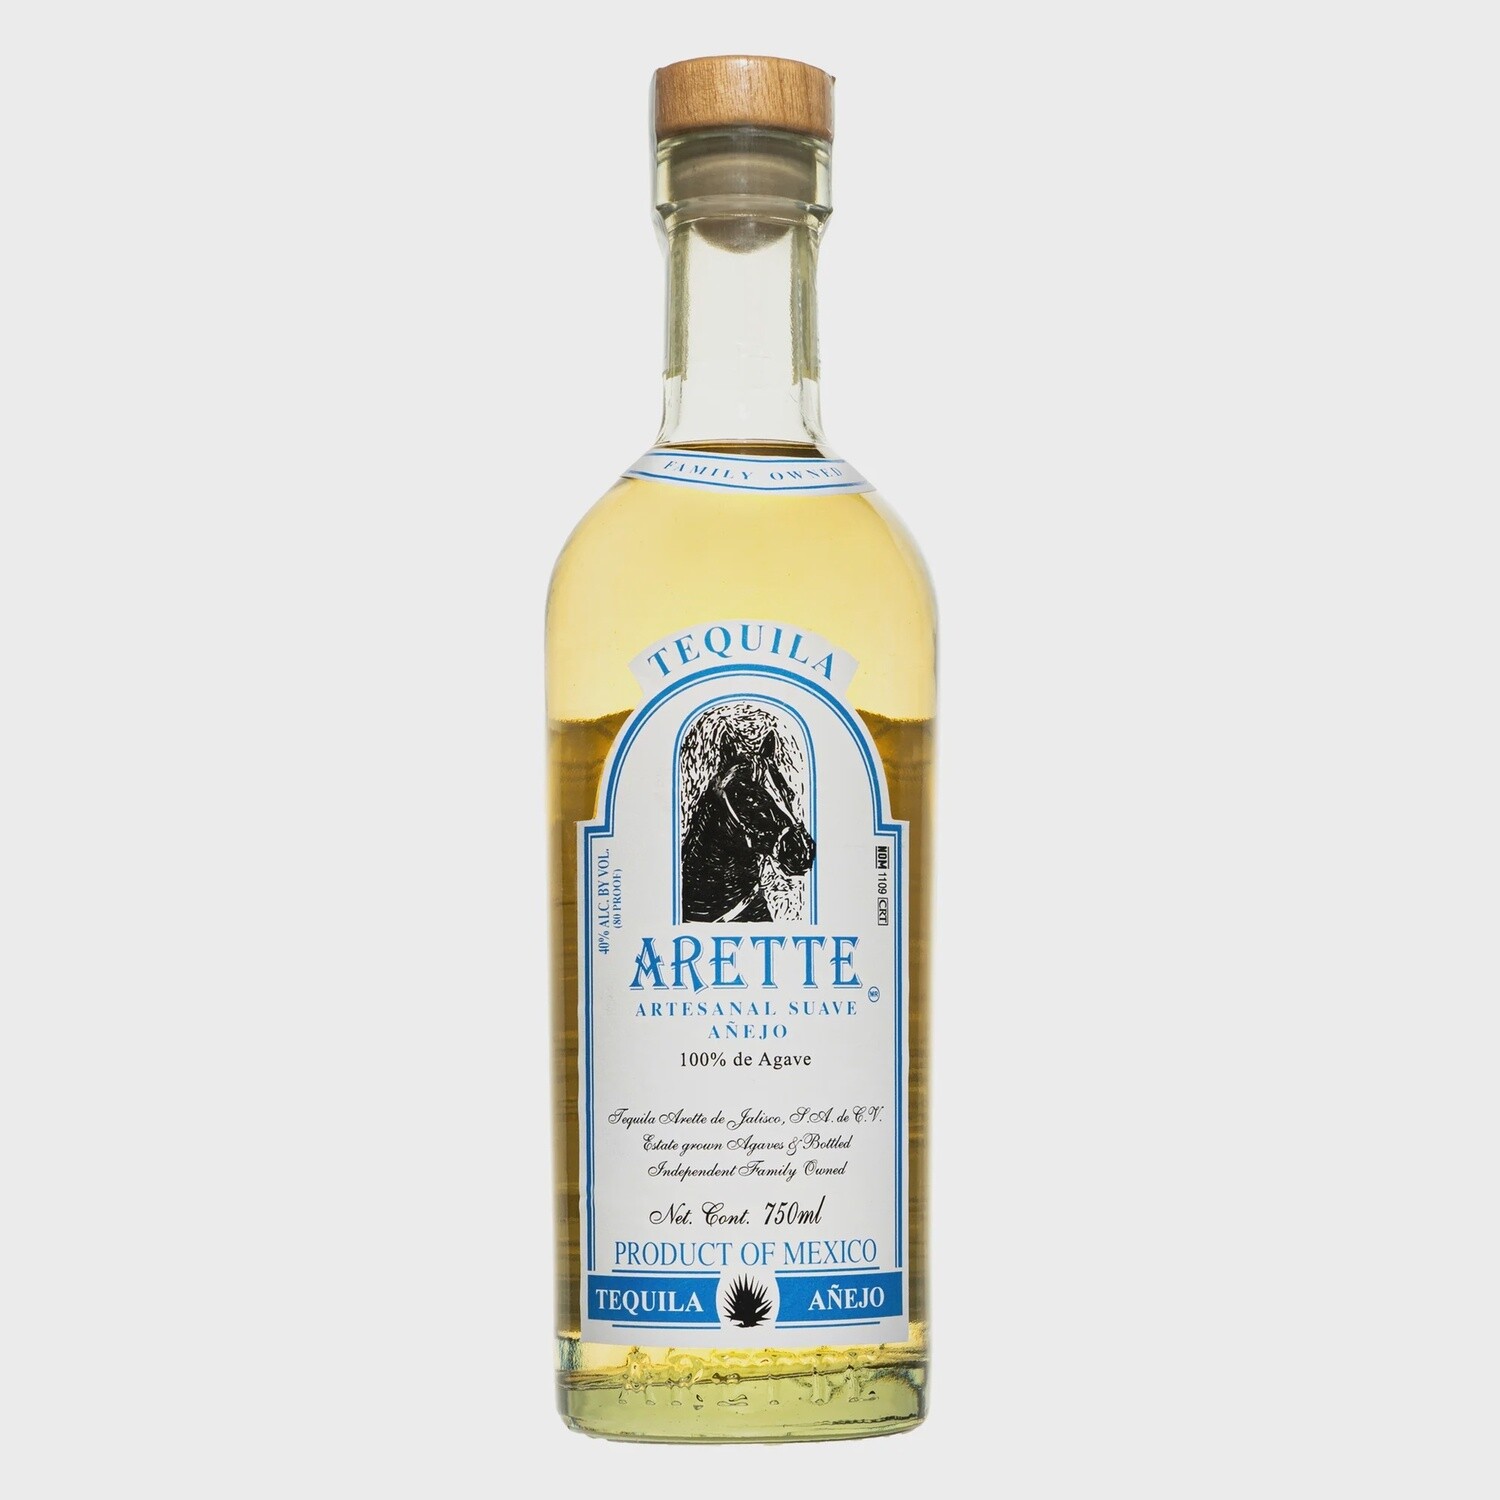 Arette Tequila Artesanal Suave Anejo 750ml